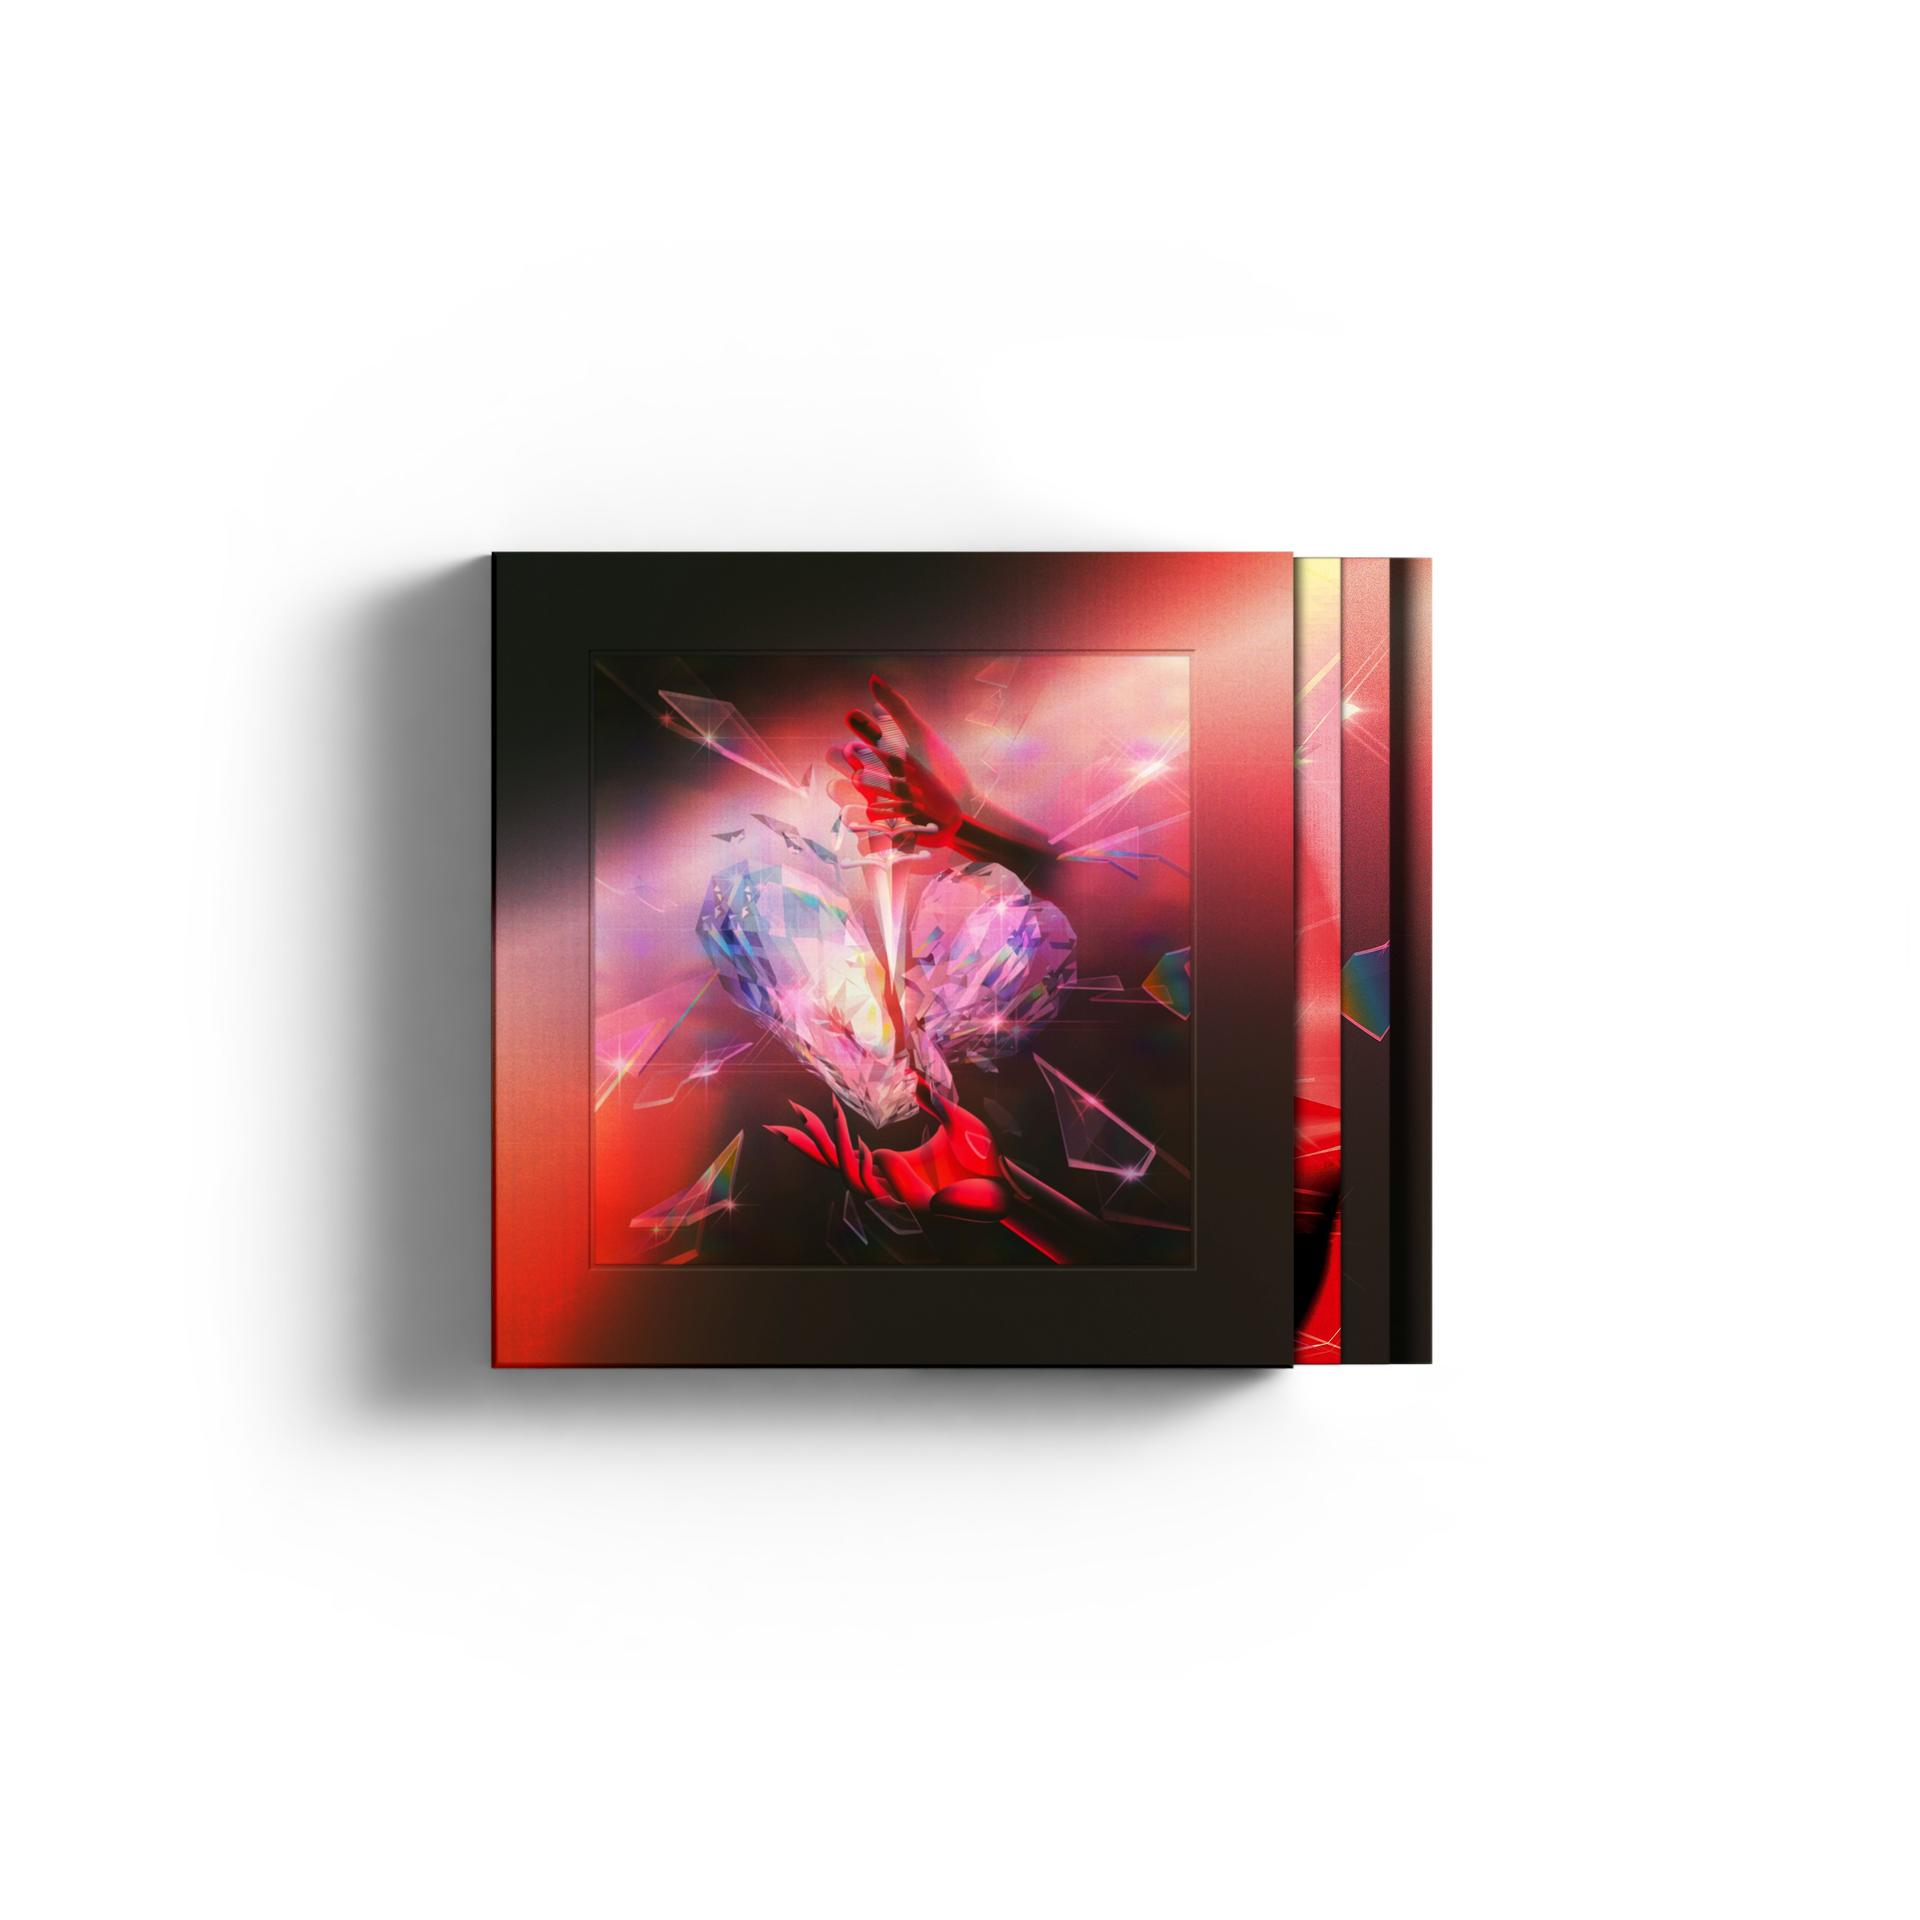 Blu-ray Stones - CD+BR Rolling The (CD + - Audio) Audio) (LTD. Hackney Diamonds